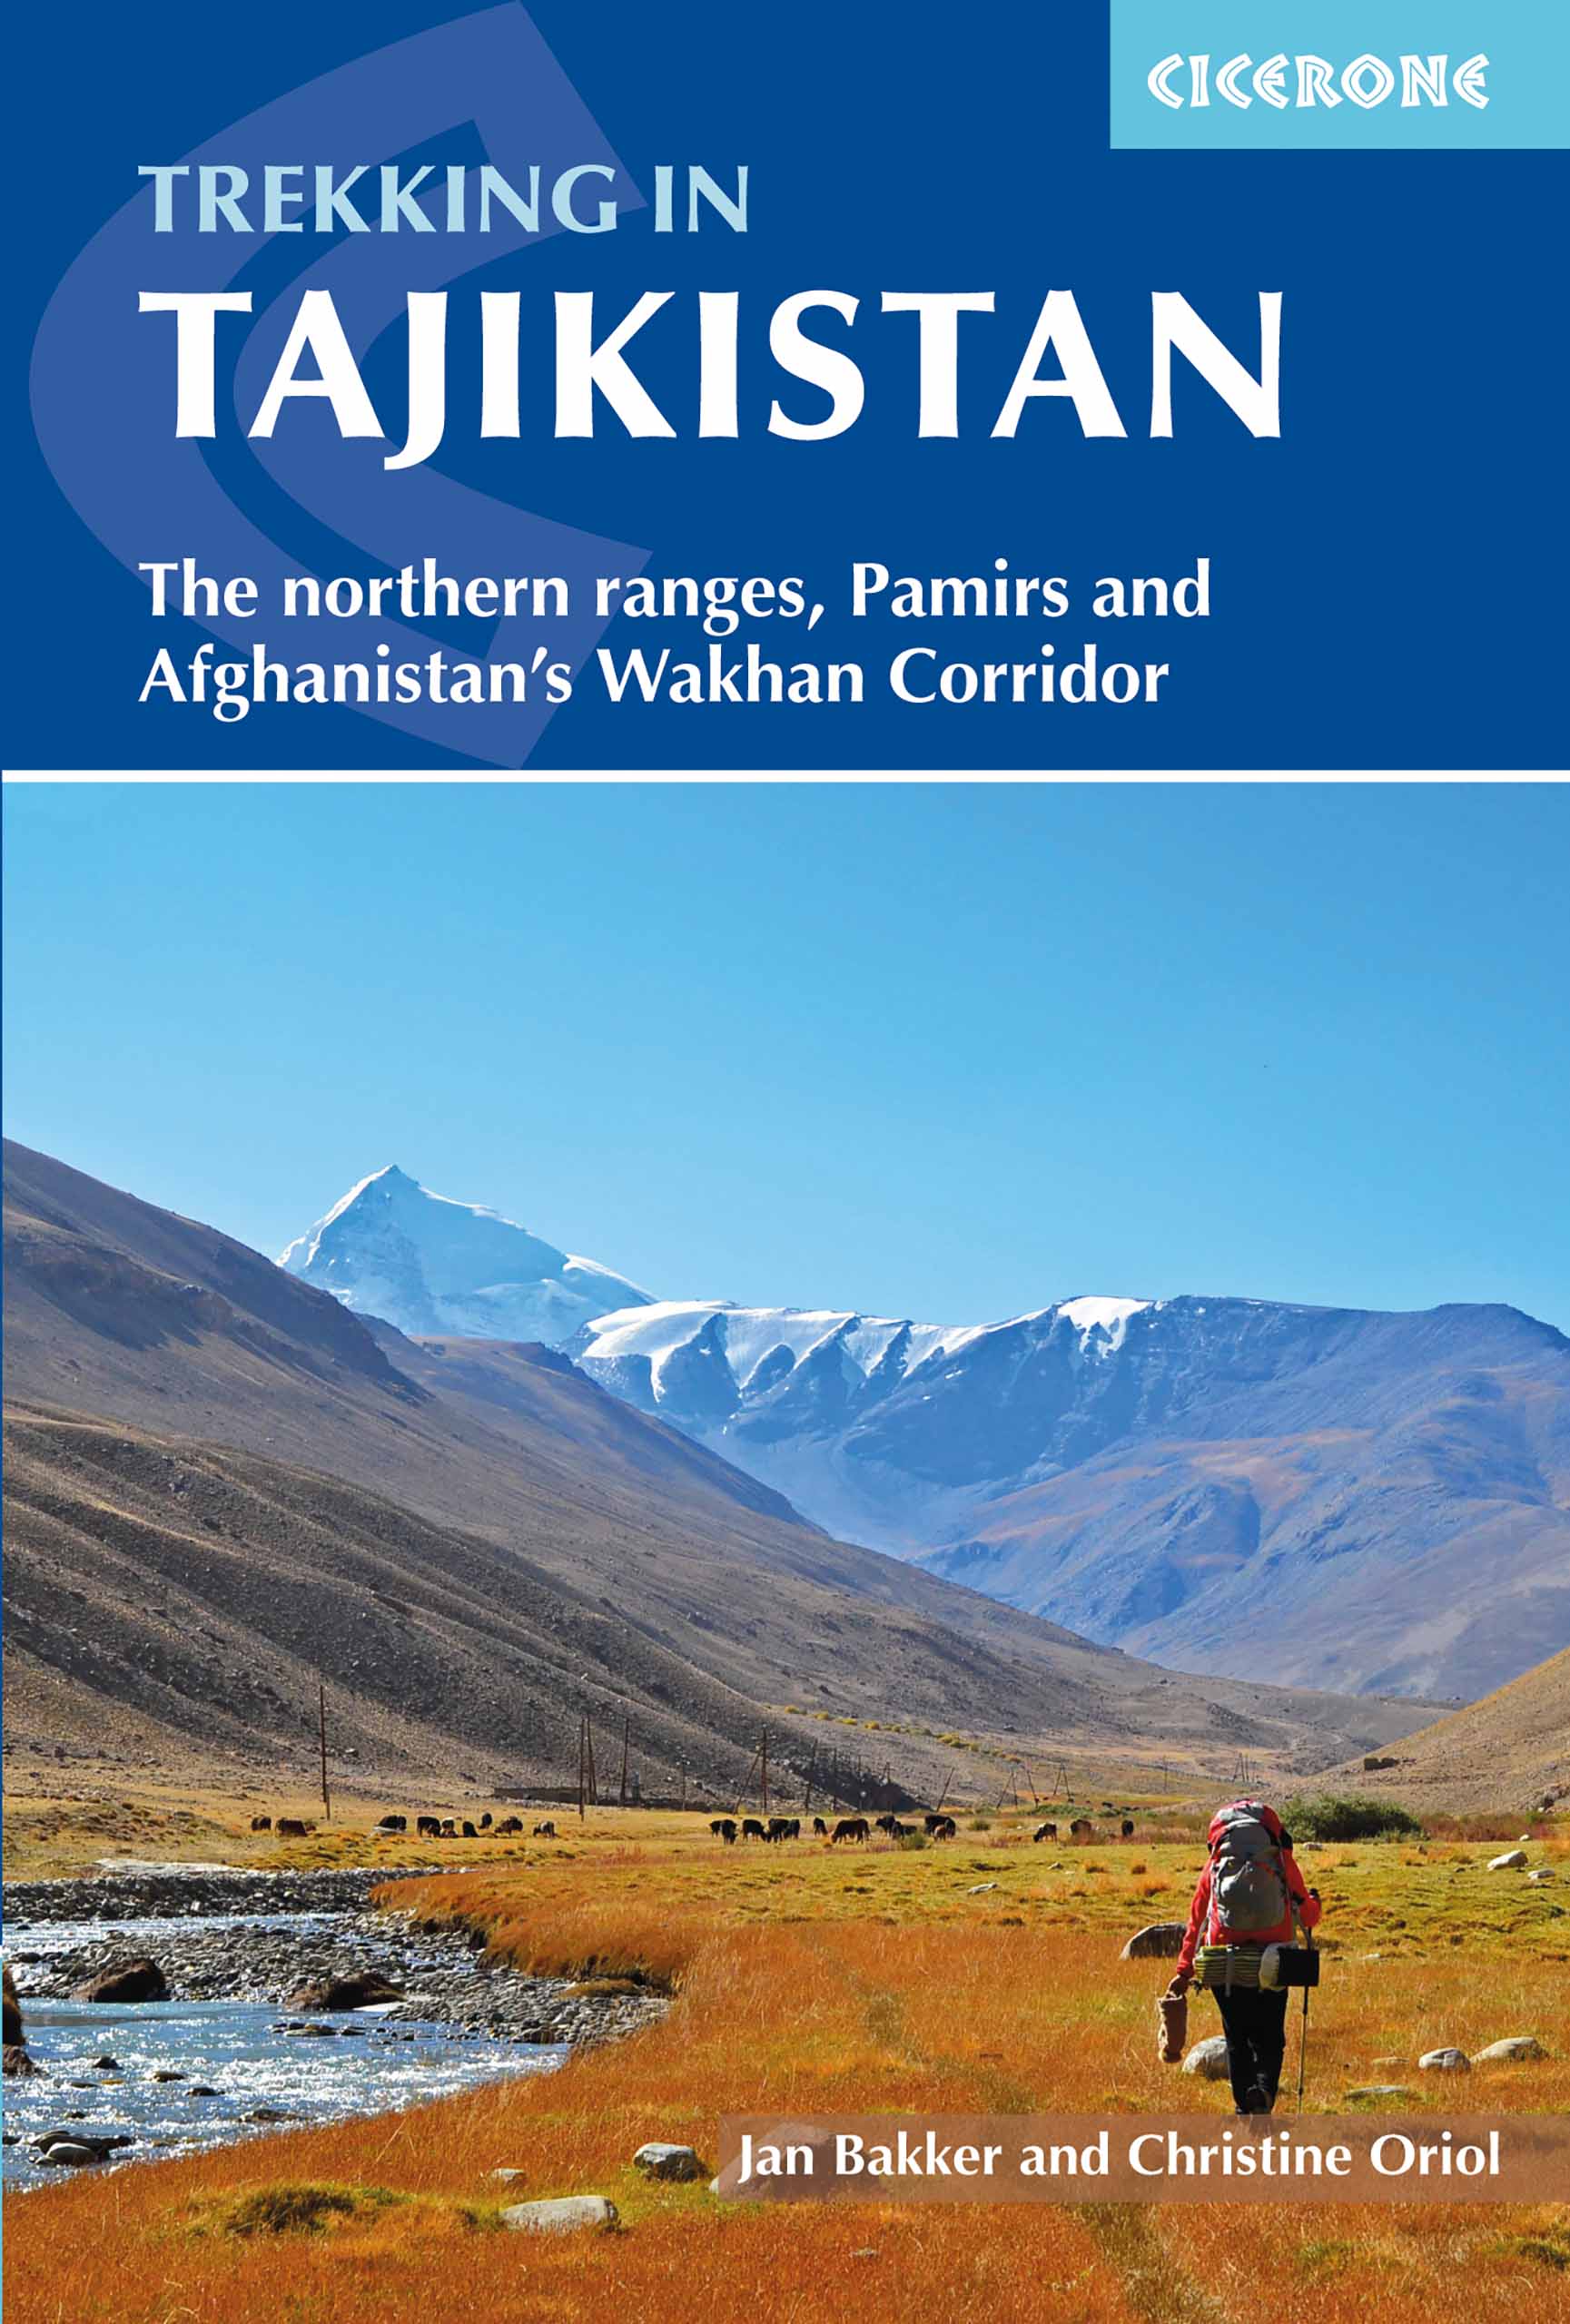 Tajikistan trekking guide